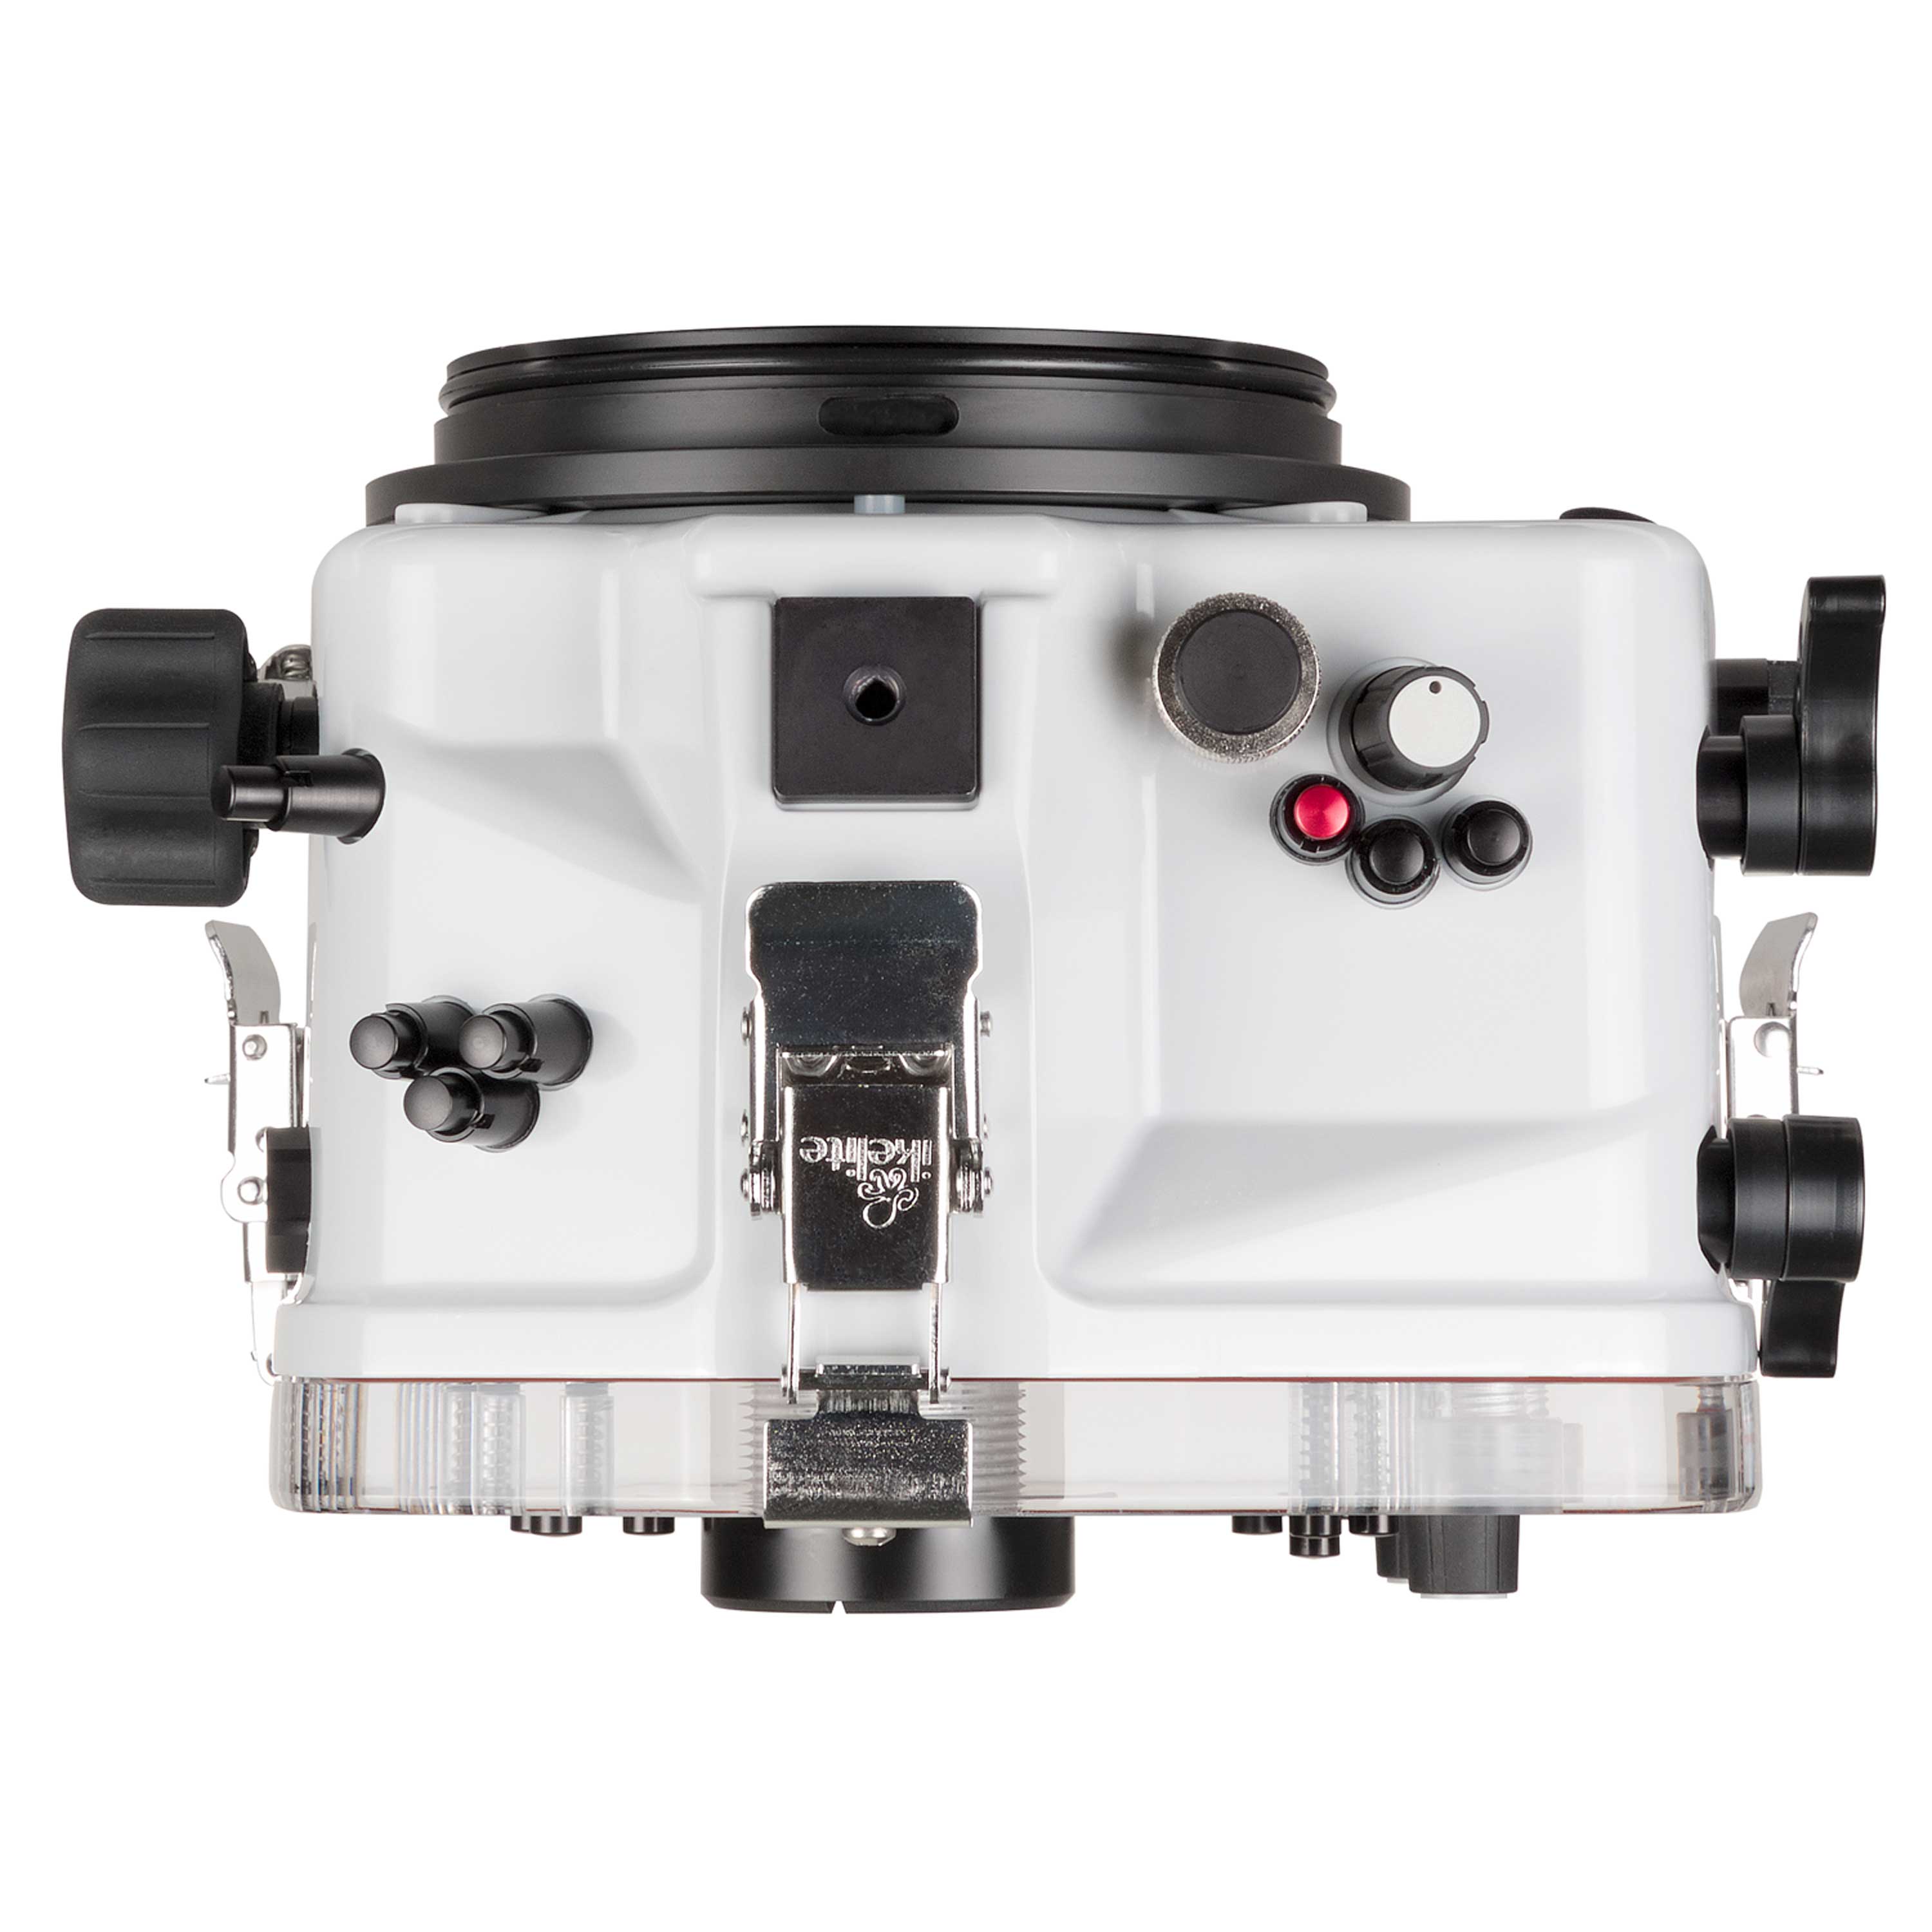 200DL Underwater Housing for Nikon D500 DSLR Cameras